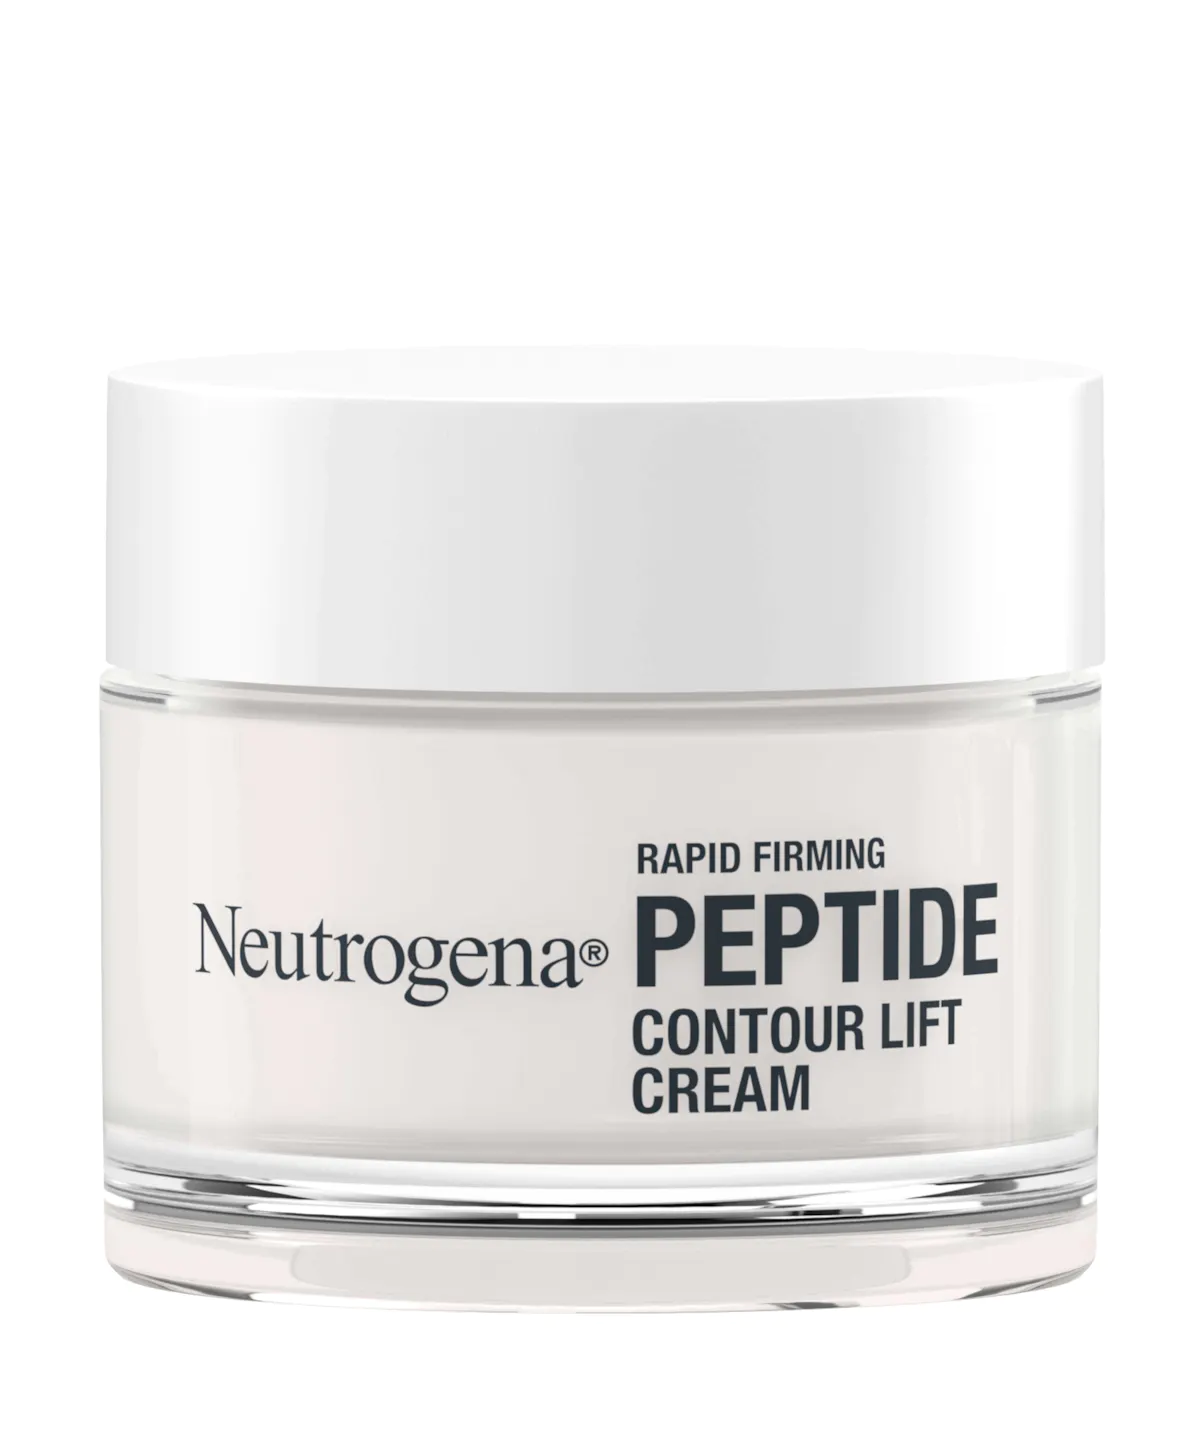 Neutrogena Rapid Firming Peptide Contour Lift Cream